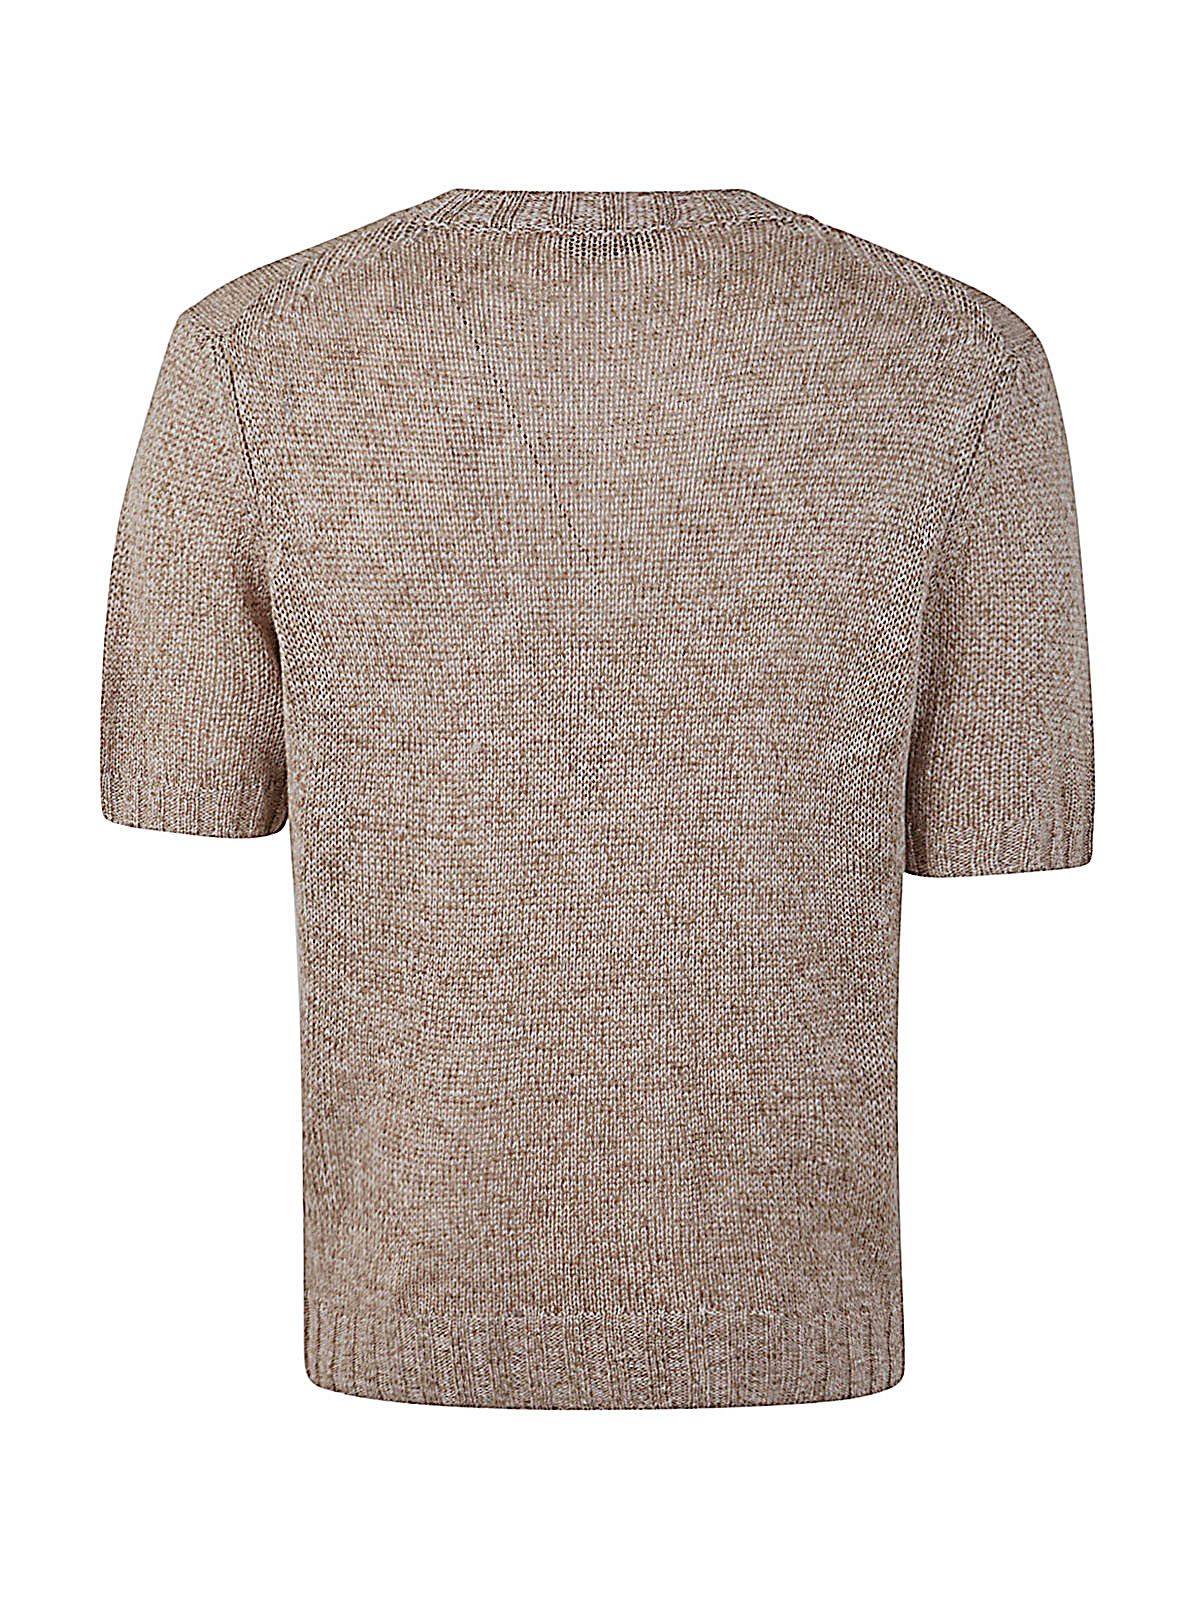 Shop Filippo De Laurentiis Mens Tshirt: Round Neck Pullover